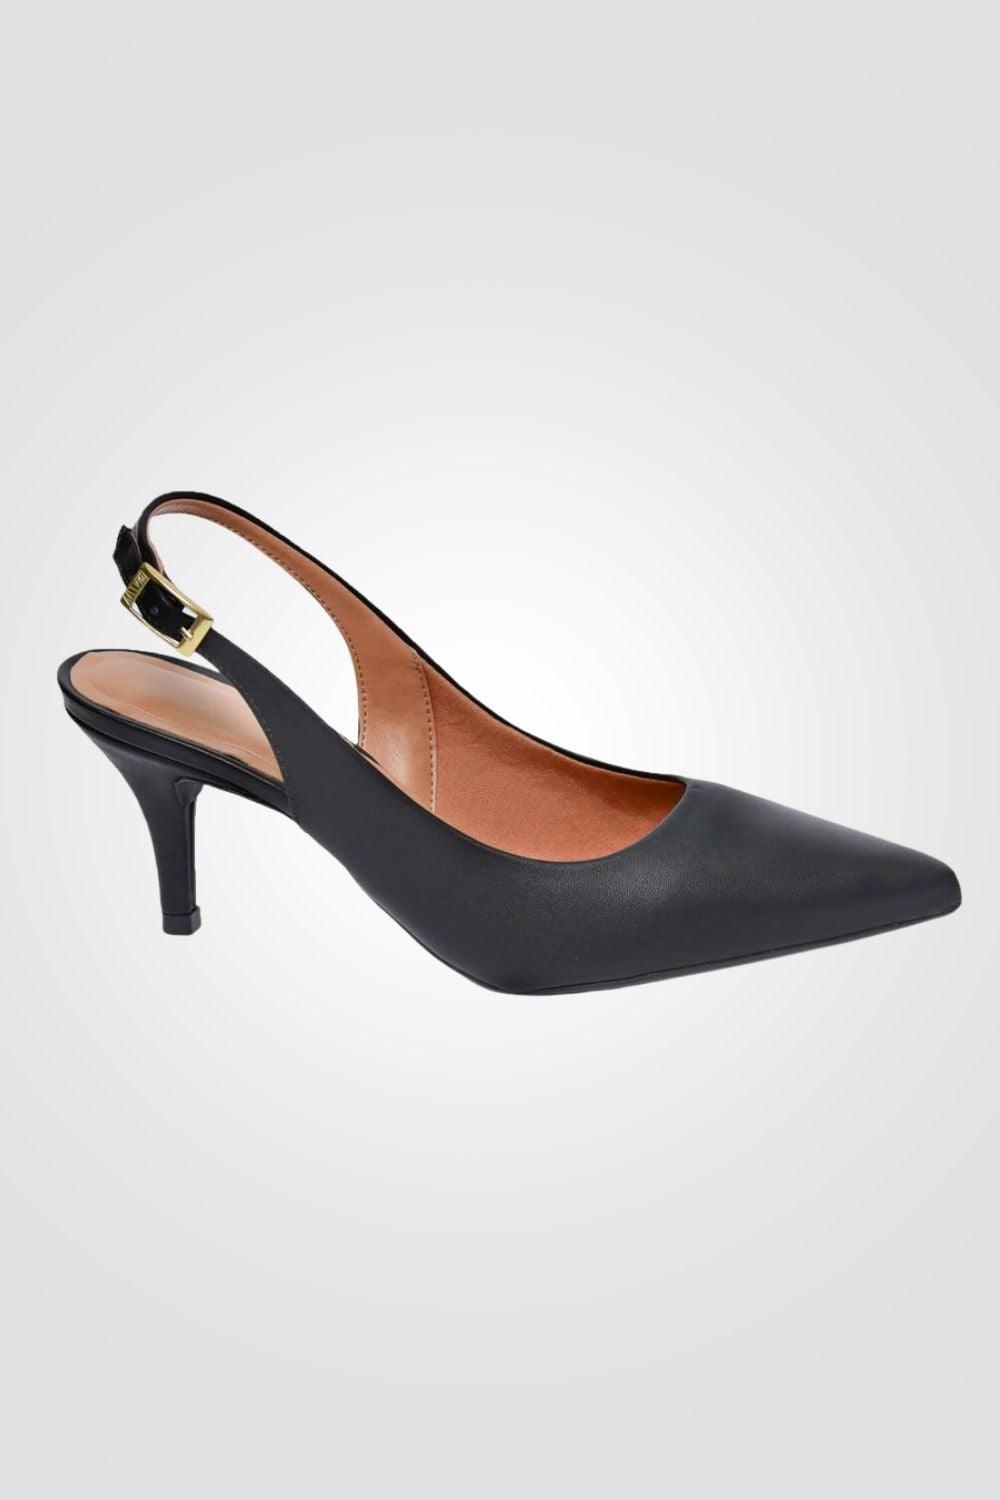 VIZZANO - נעלי עקב נוחות לנשים VIZZANO בצבע שחור - MASHBIR//365